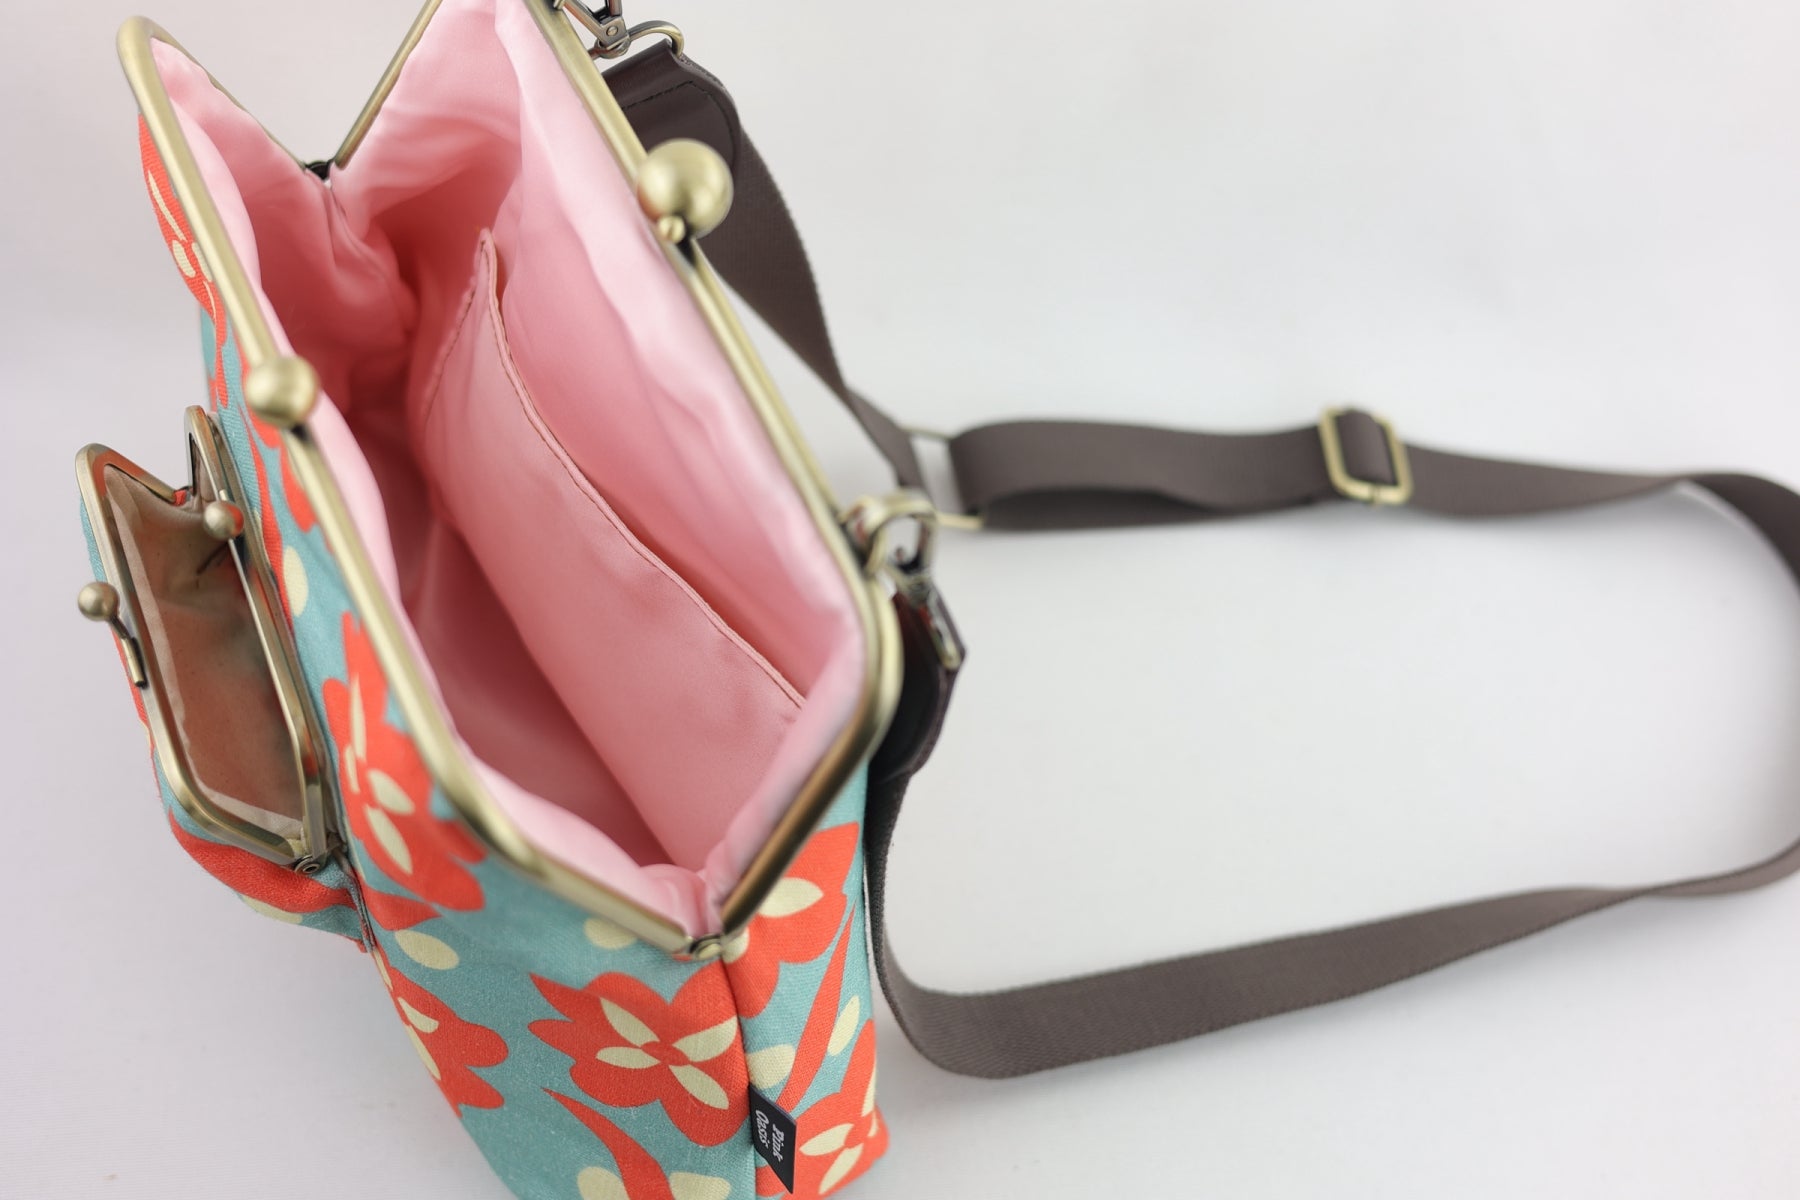 Daisy Teal & Orange Handbag and Crossbody 2 Way Bag | PINK OASIS